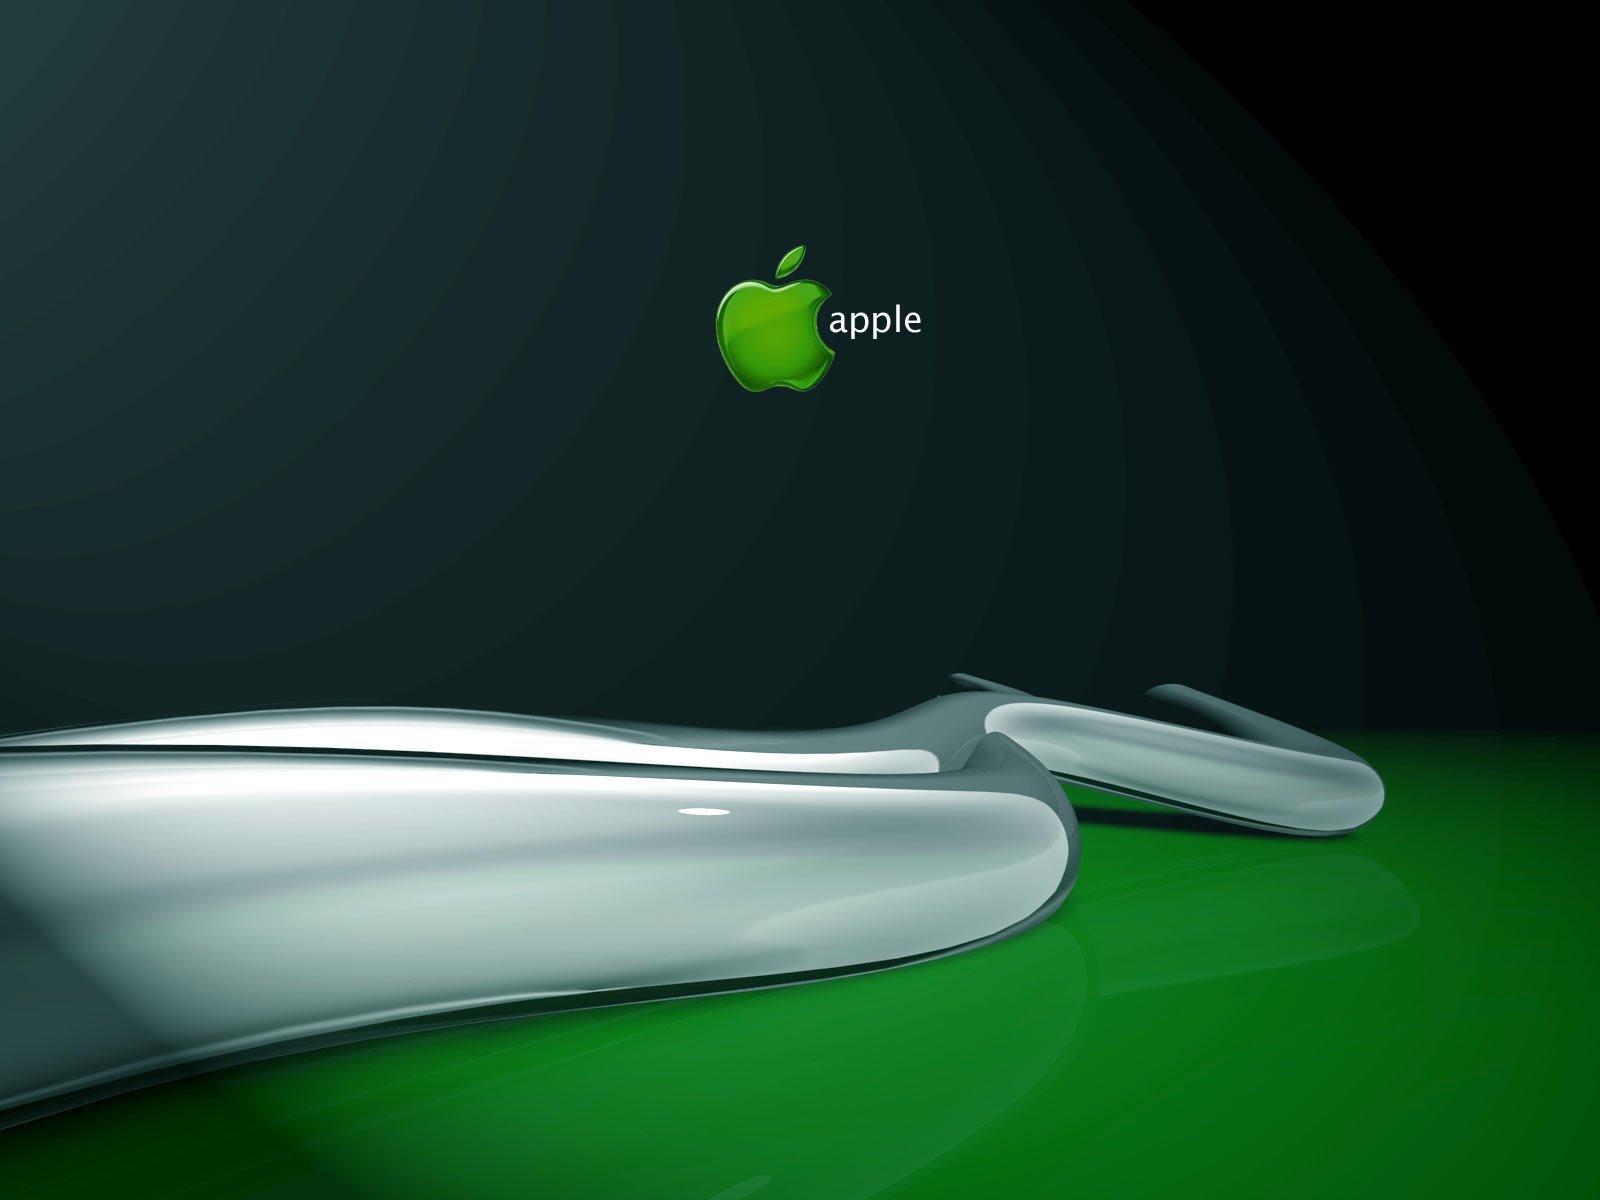 Apple green background free desktop background wallpaper image